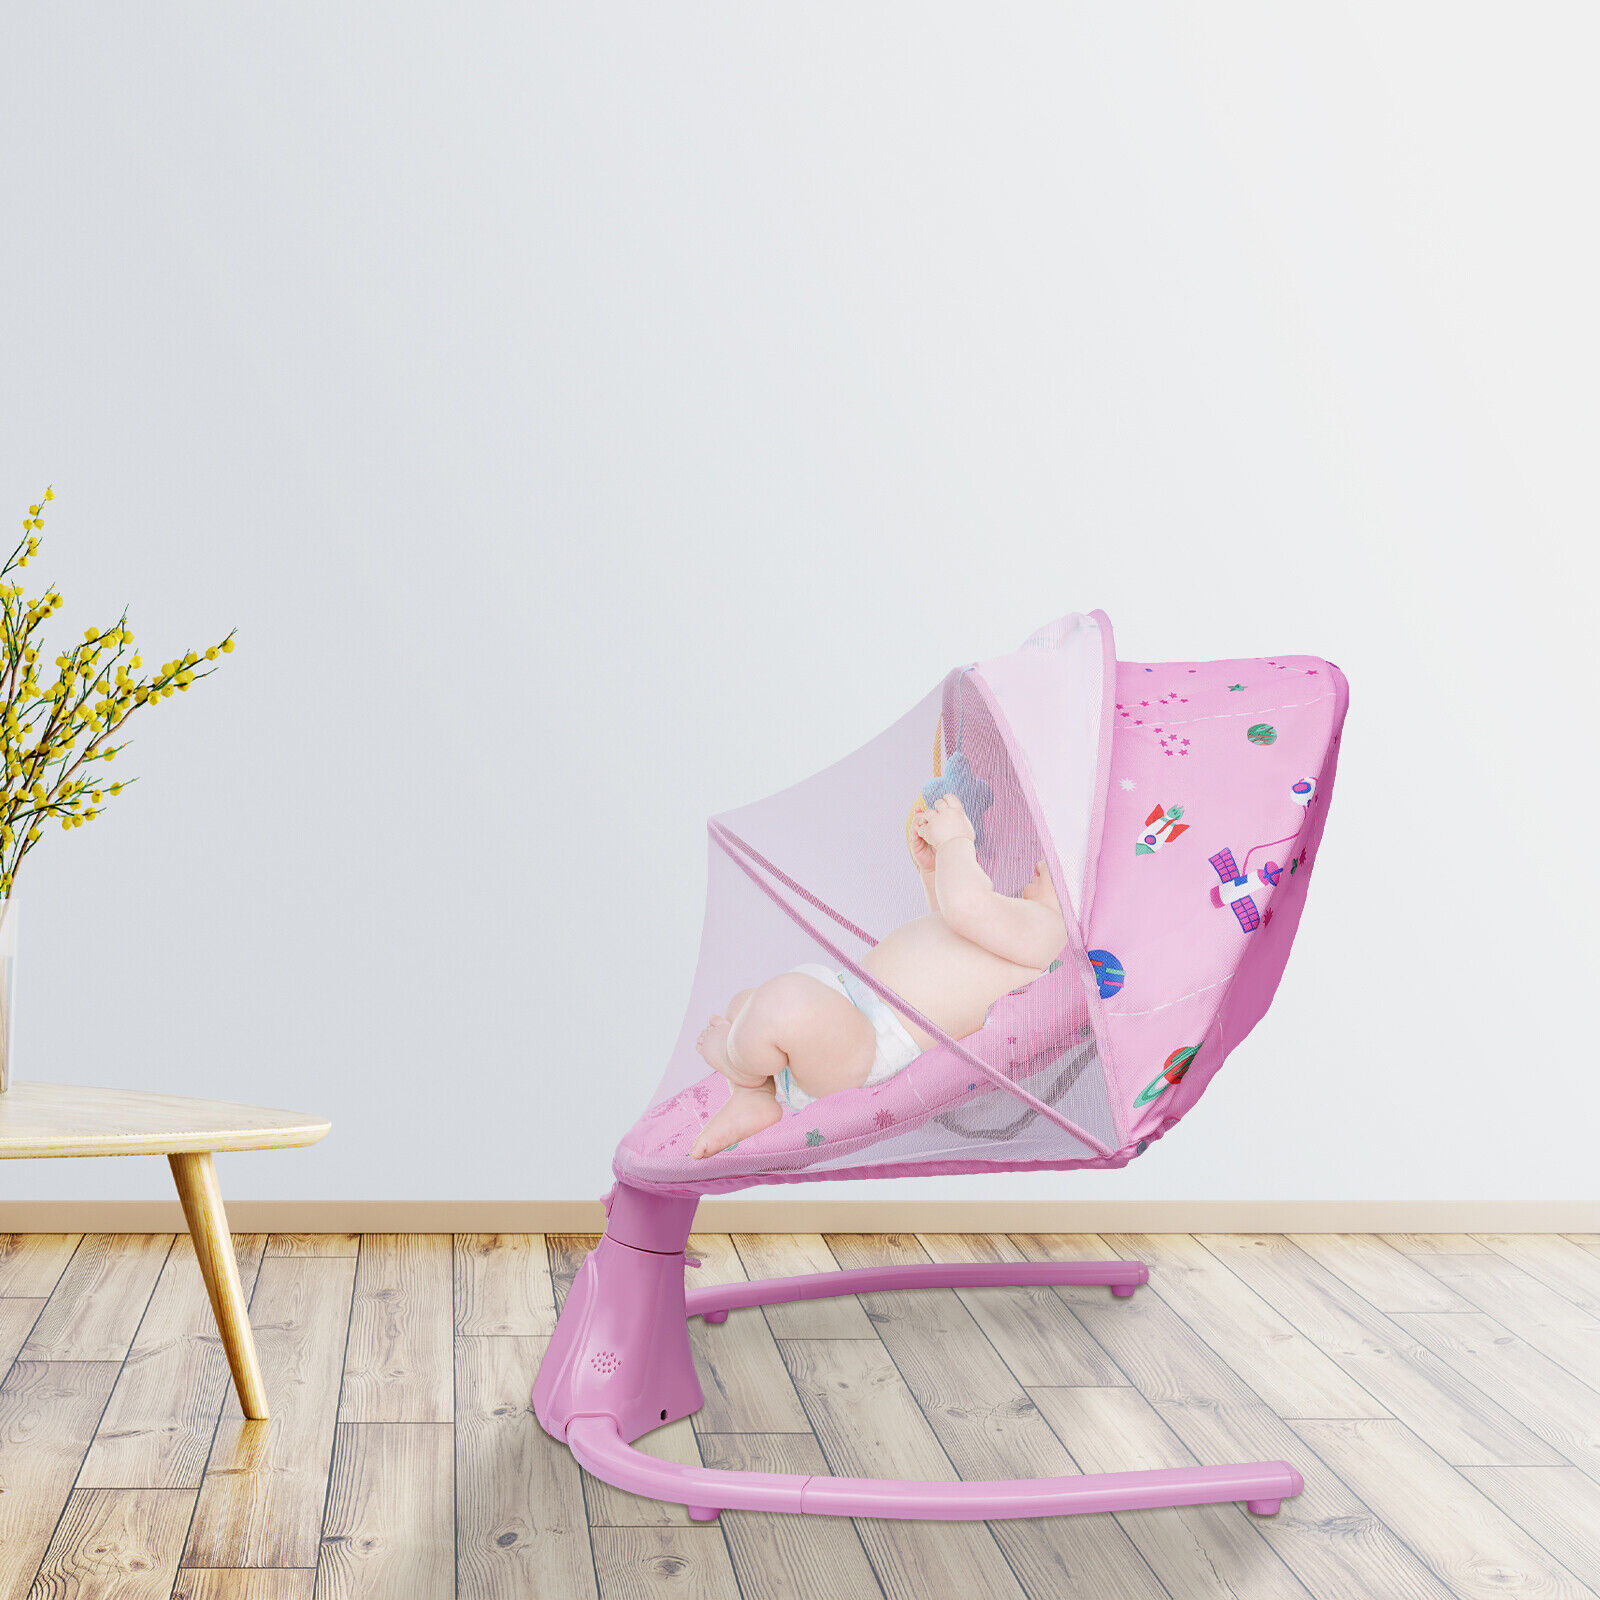 TFCFL Portable Electric Baby Swing Cradle Rocker Newborn Comfort Sleep Chair Crib Music Seat Pink - image 3 of 8